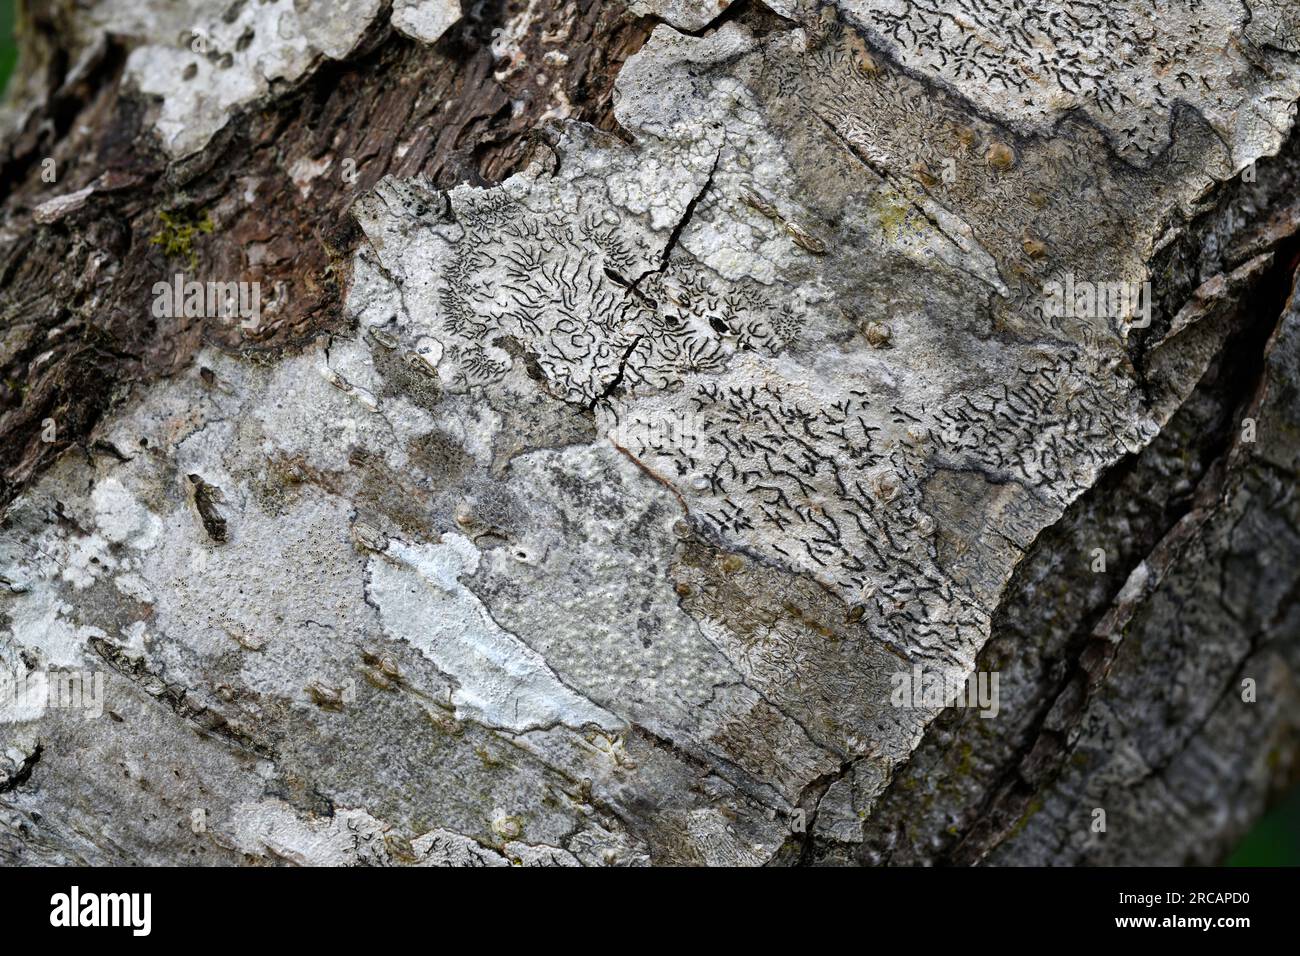 Graphis elegans is a crustose lichen that grow on tree barks. Under him grows another crustose lichen Pertusaria pertusa. This photo was taken in Etan Stock Photo